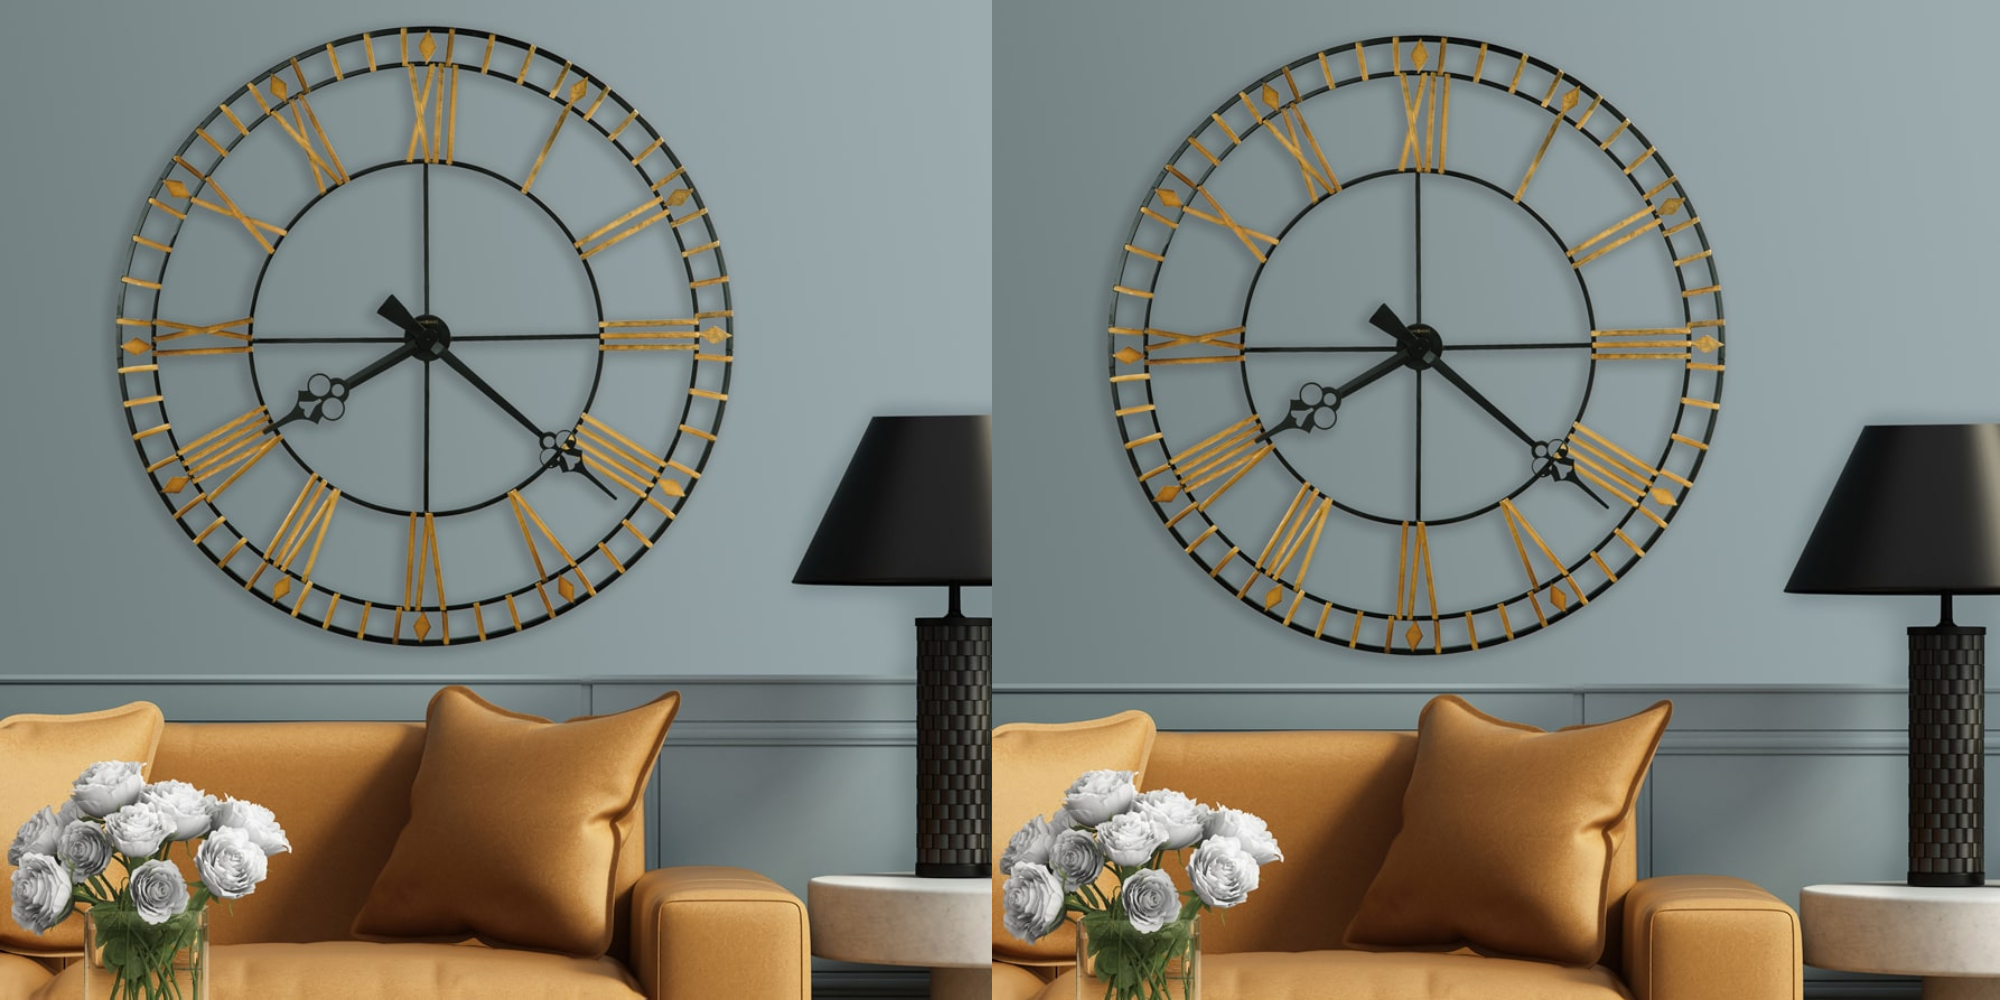 Wall Clocks Company Time II Wall Clock